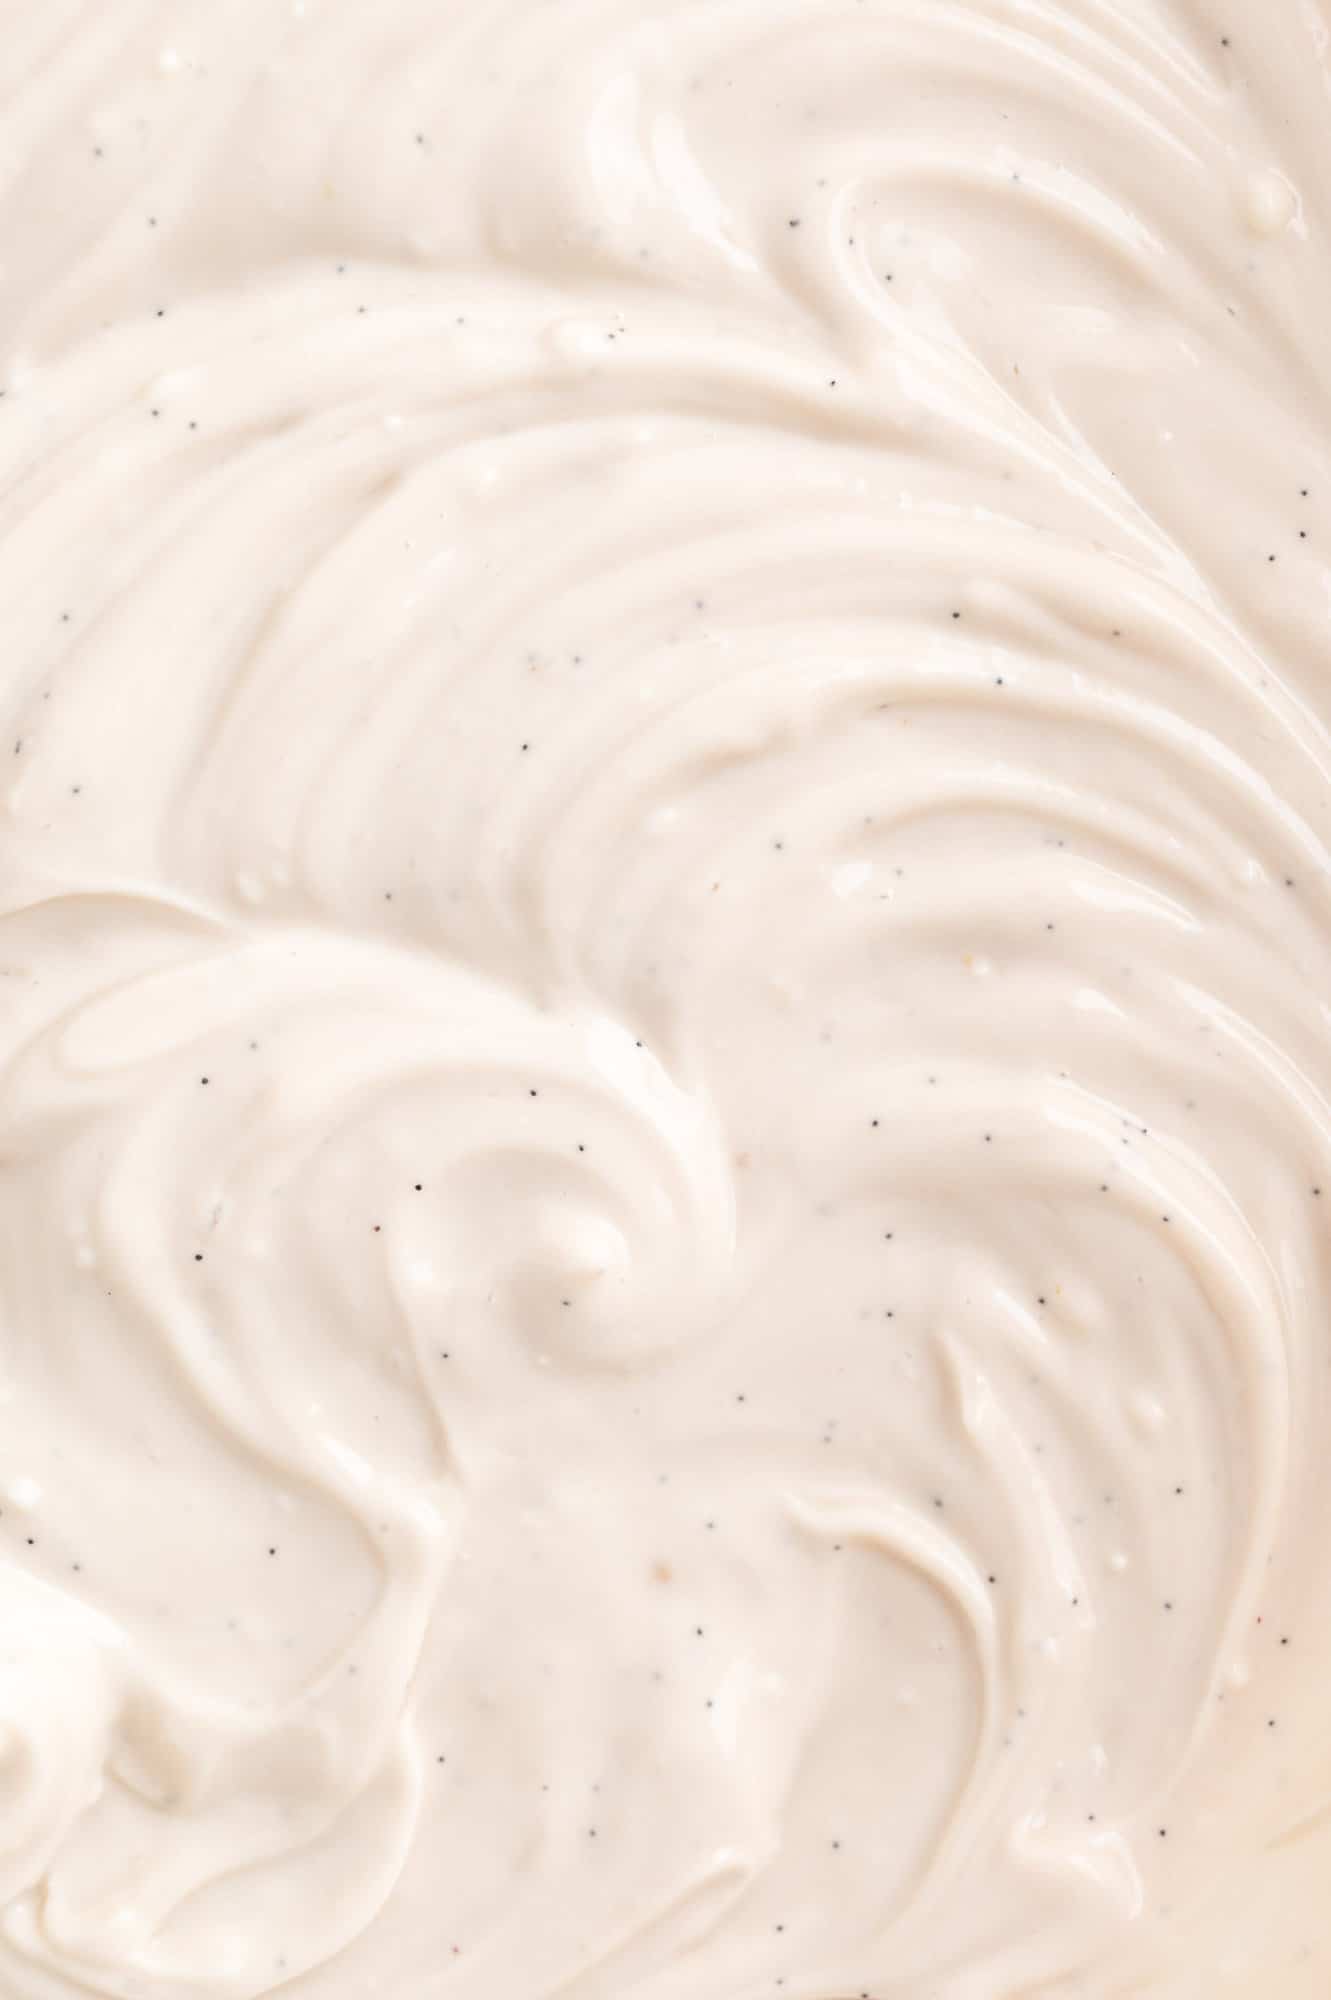 Close up of cream cheese fruit dip.